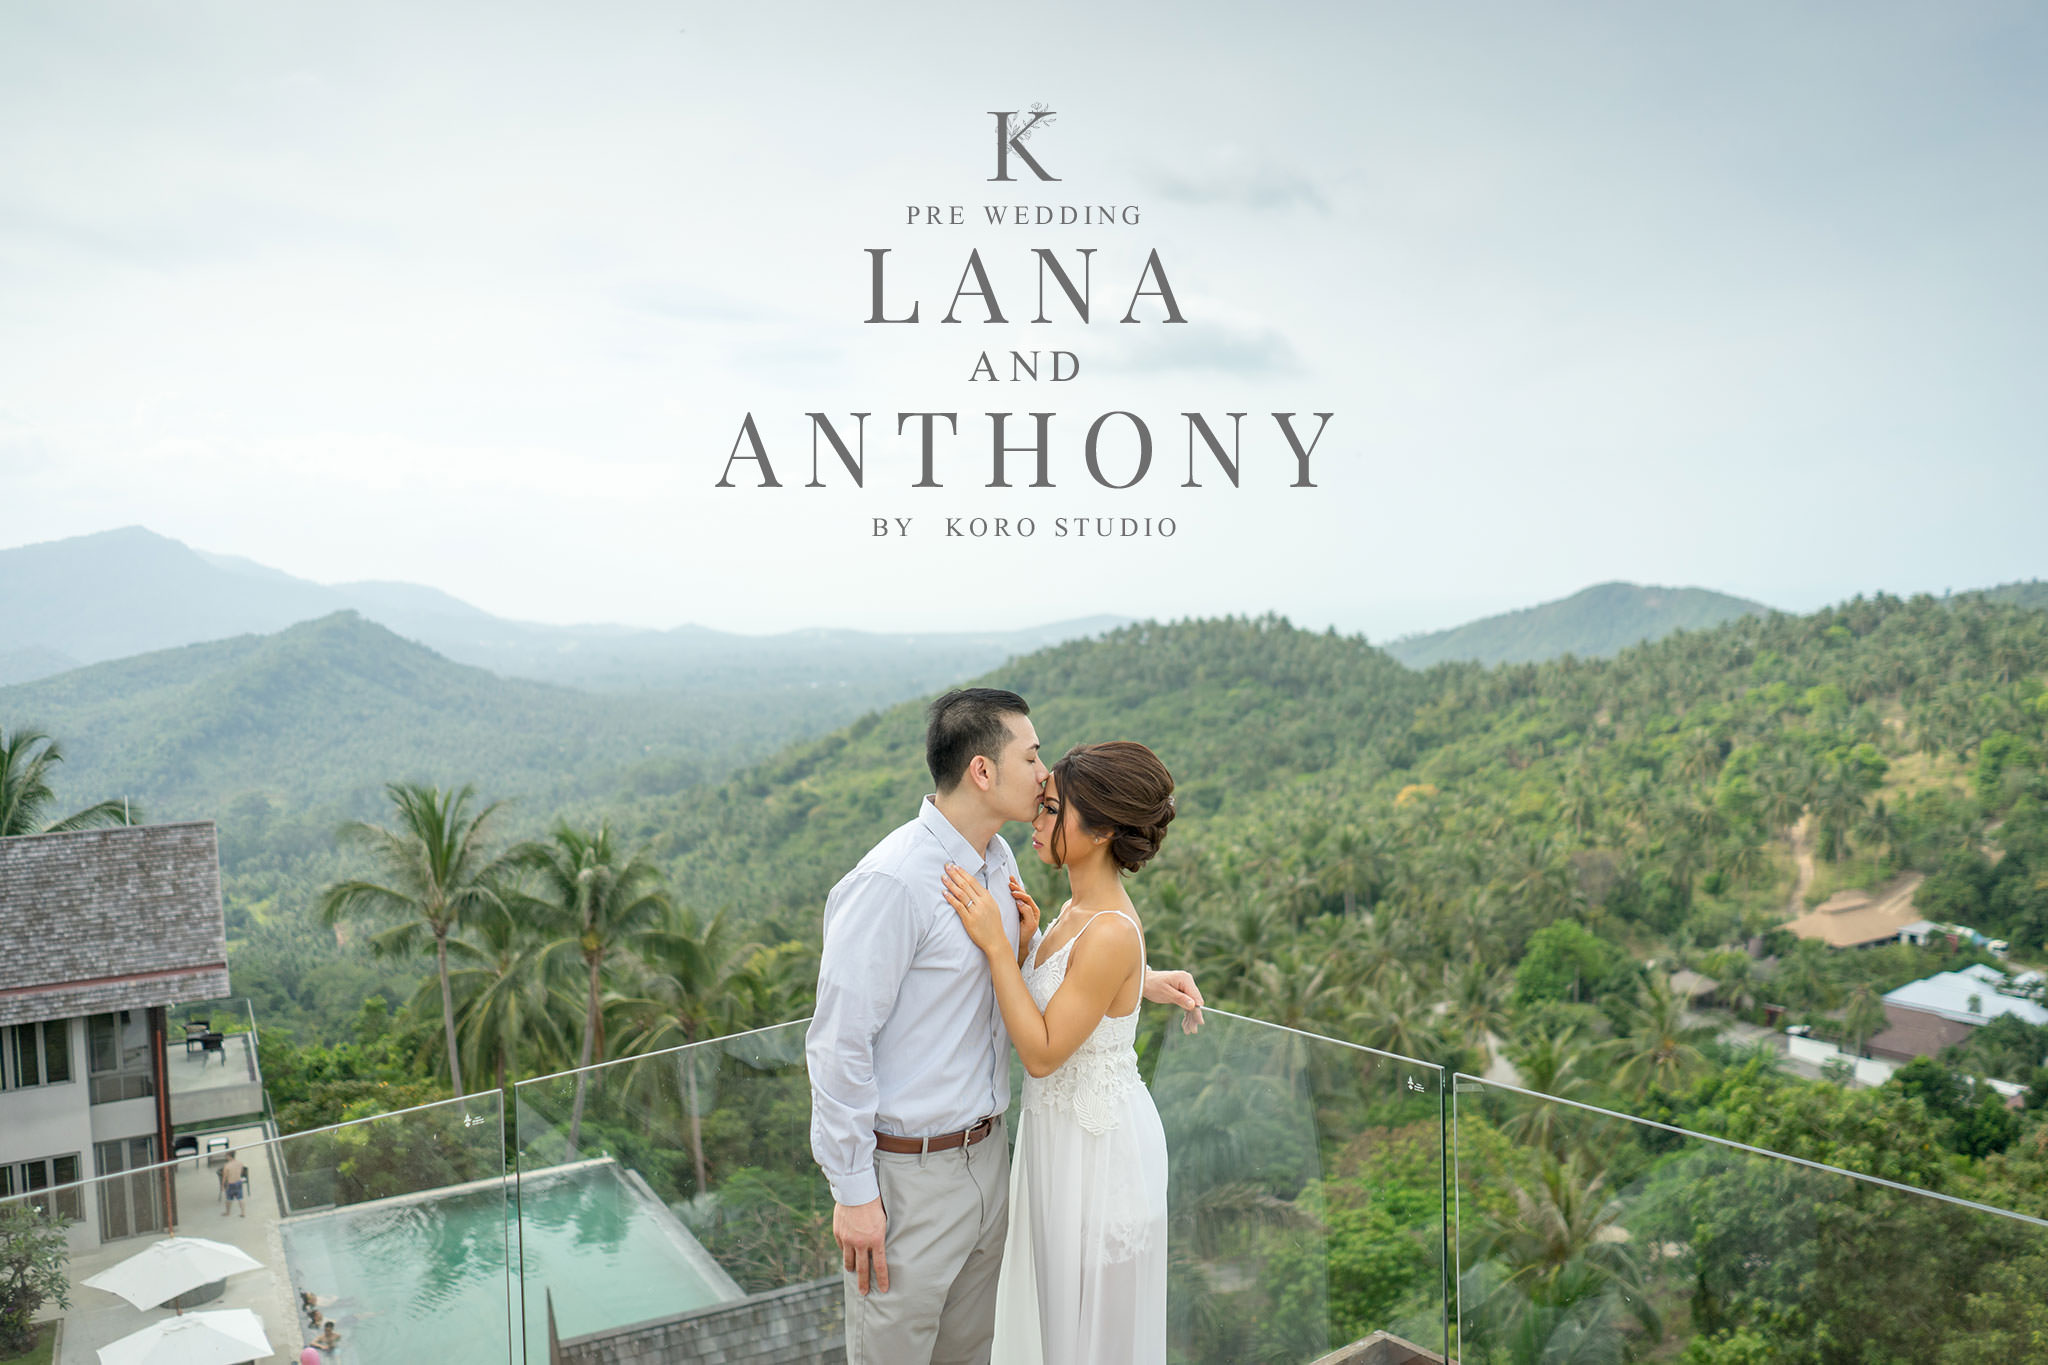 koh samui pre wedding photographer cover Pre-Wedding Koh Samui Lana + Anthony at Koh Samui